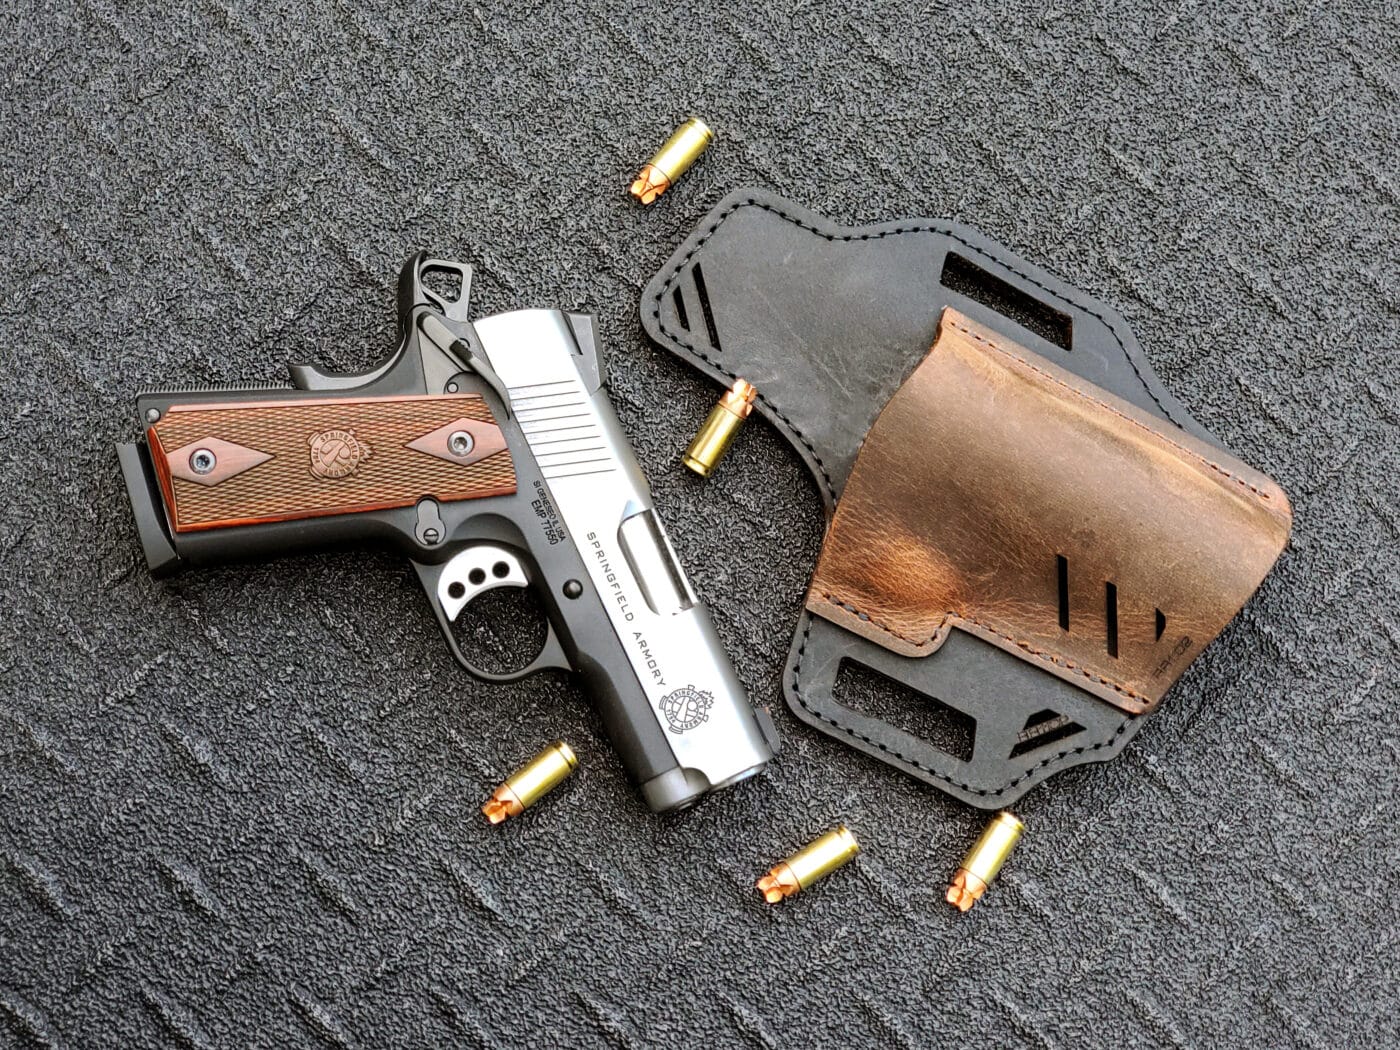 1911 pistol, handgun ammunition, and Verscarry Rough Rider holster